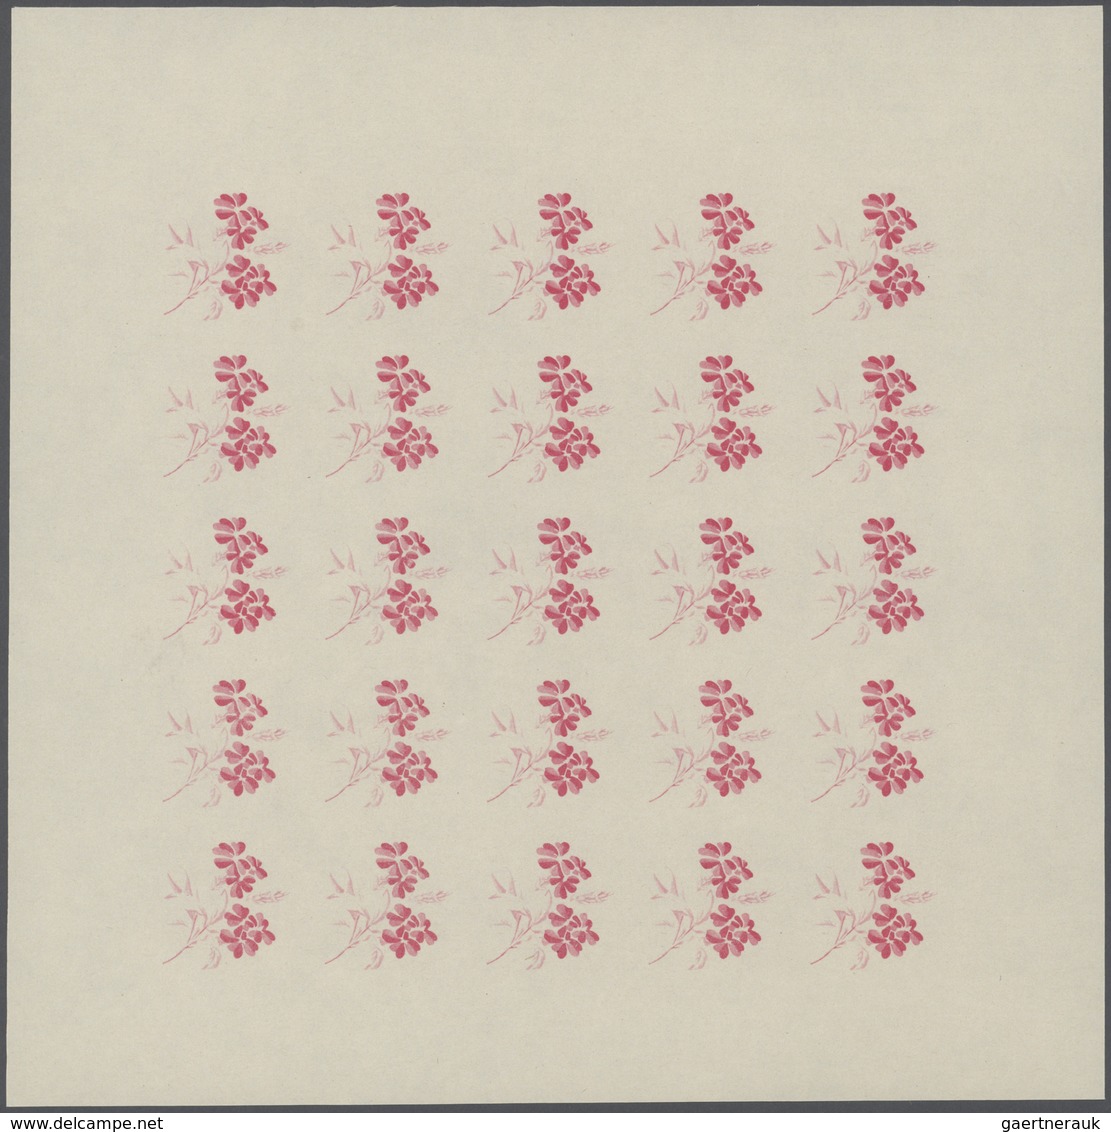 Thematik: Flora, Botanik / flora, botany, bloom: 1966, Burundi. Progressive proofs set of sheets for